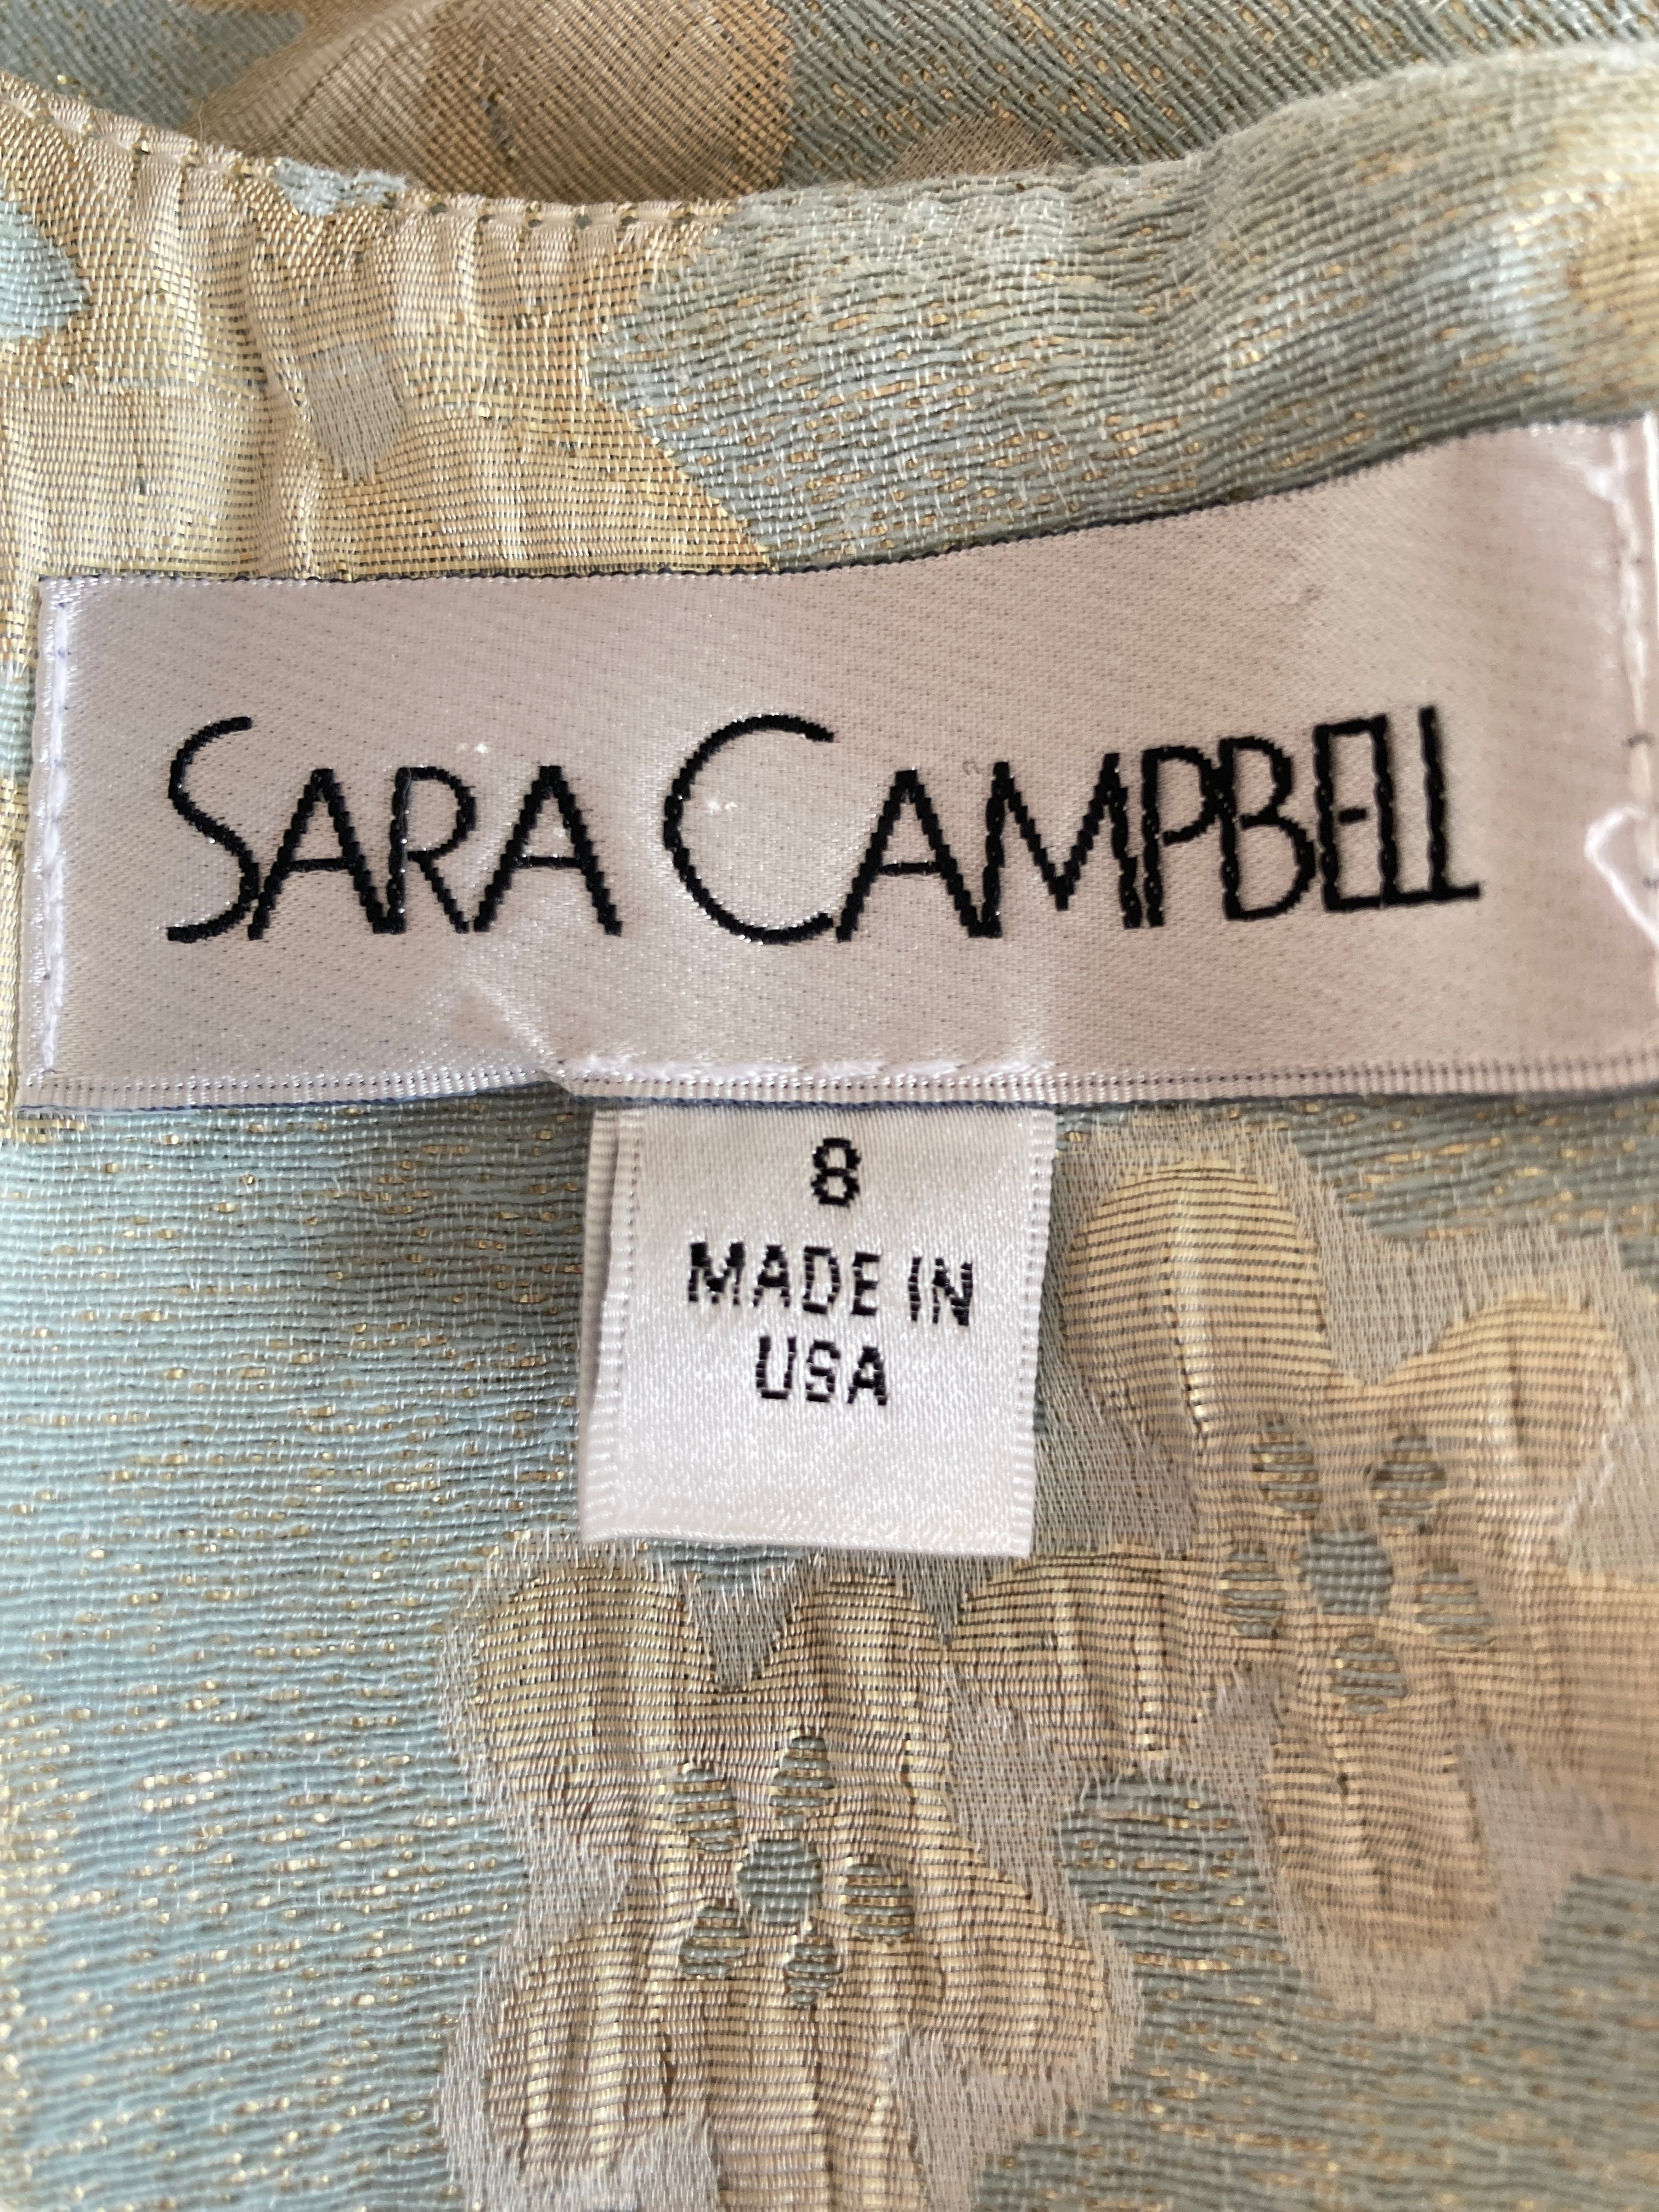 Sara Campbell Champagne Jacquard Dress, 8